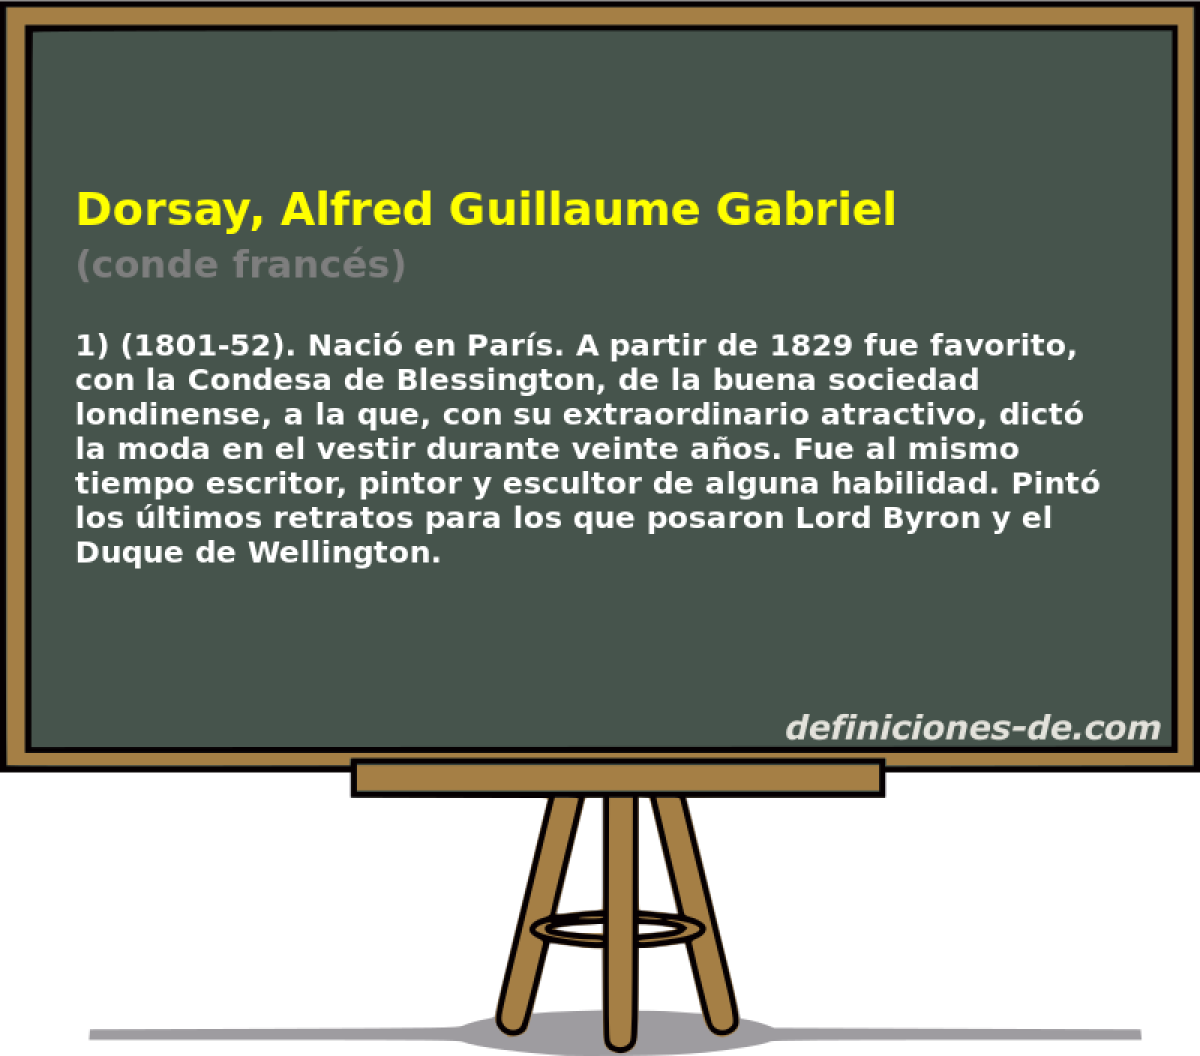 Dorsay, Alfred Guillaume Gabriel (conde francs)